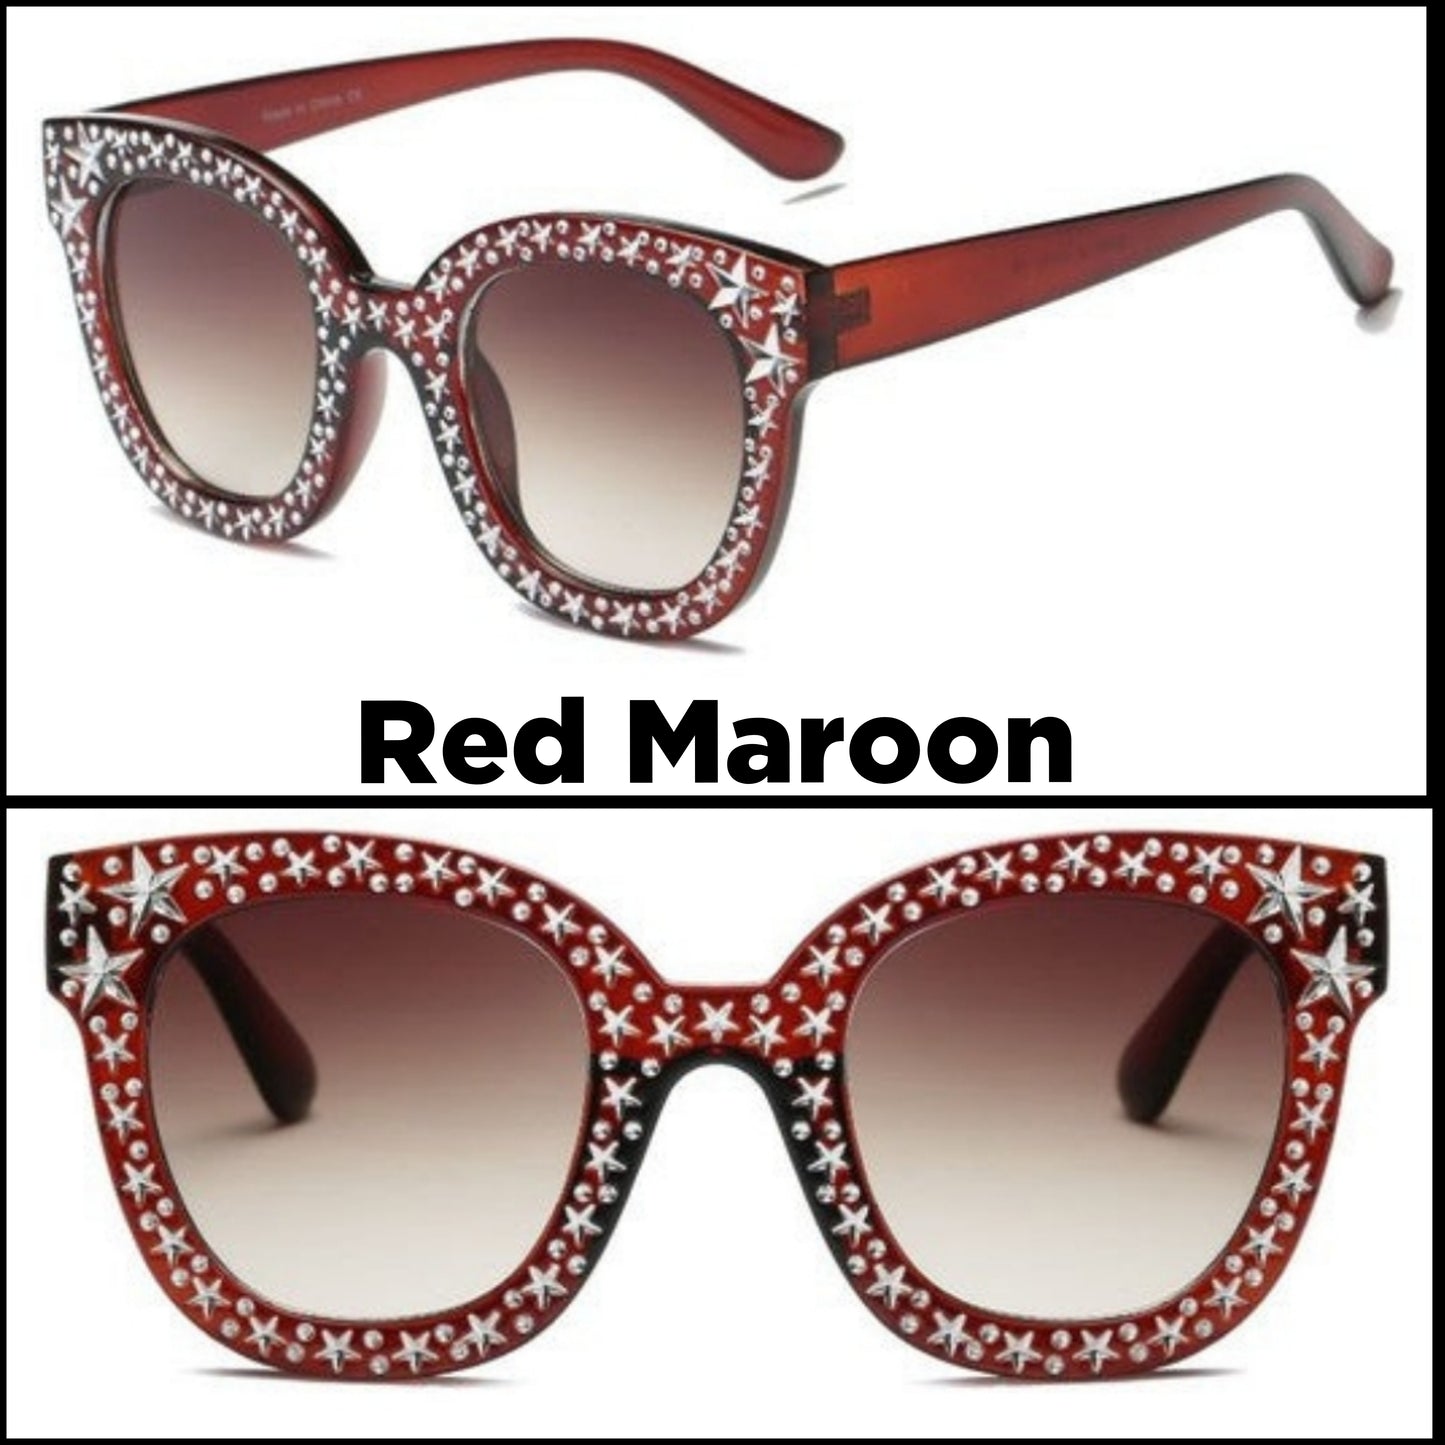 Sunglasses Star Studded Rhinestone Round Cat Eye Womens Fashion UVA